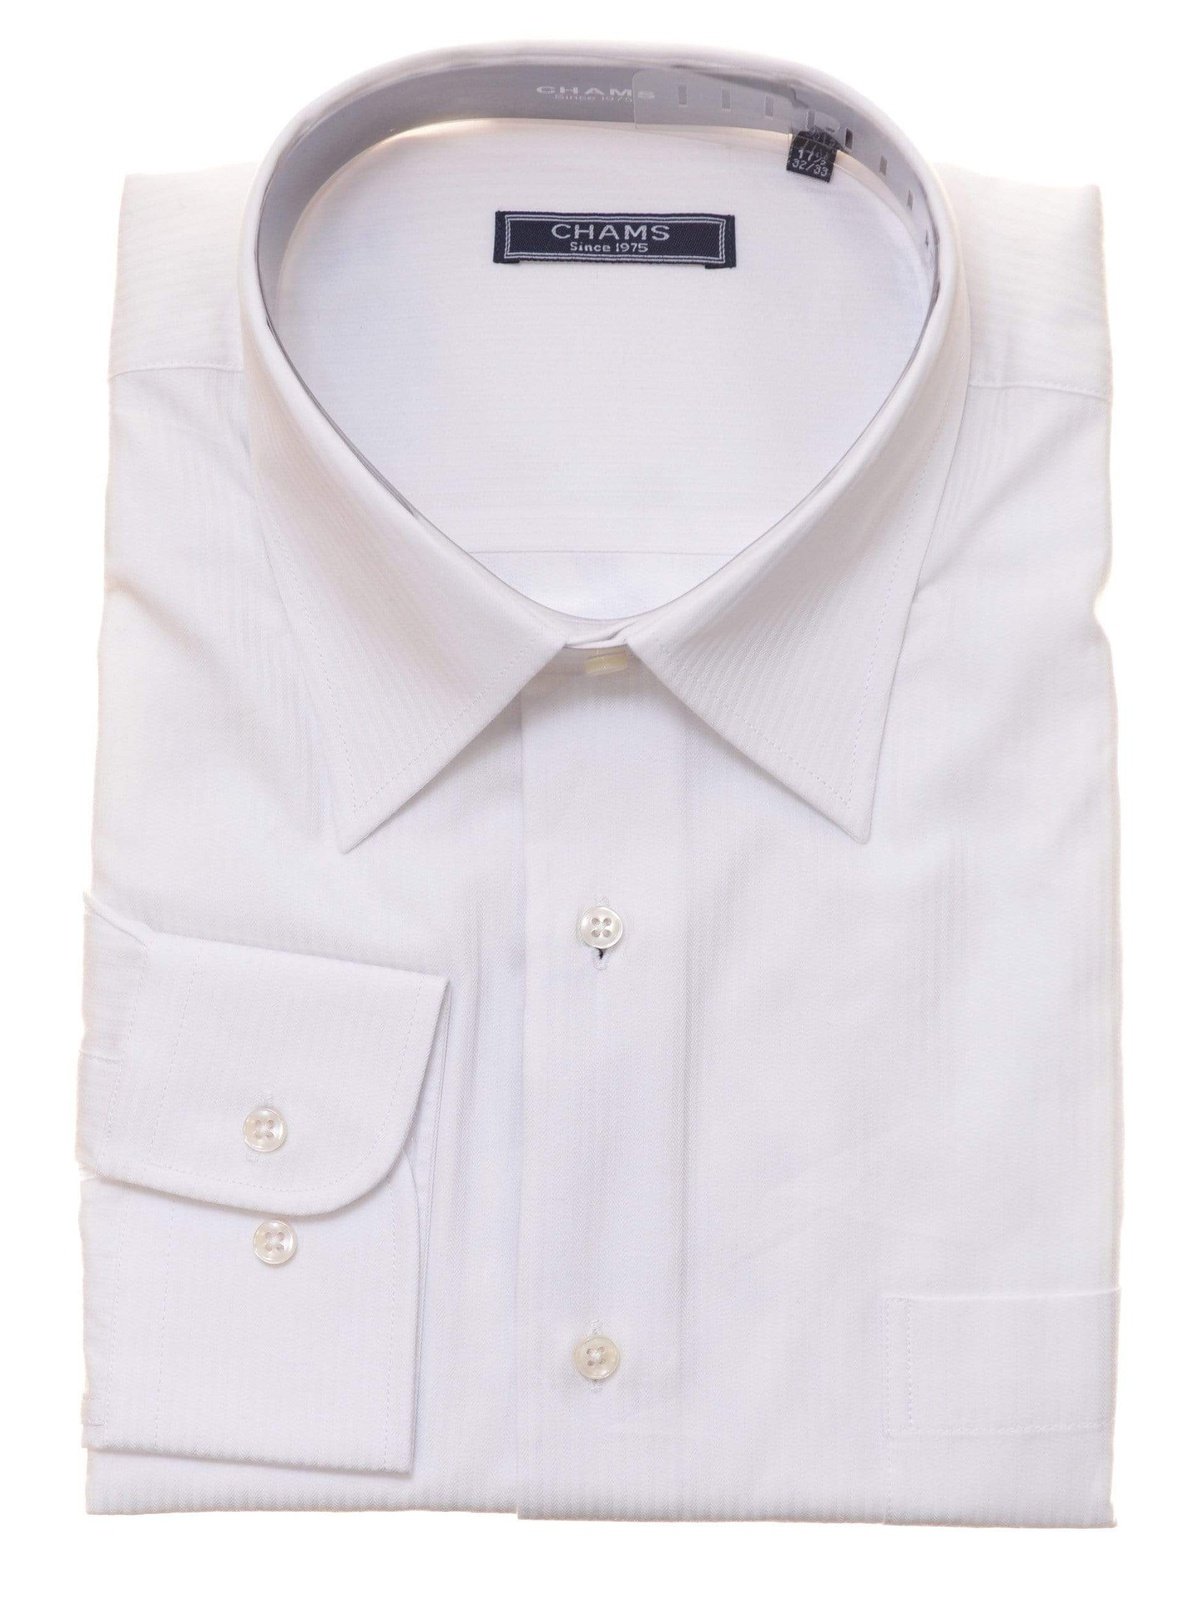 Chams SHIRTS Chams Classic Fit White Tonal Pinstriped Soft Cotton Dress Shirt